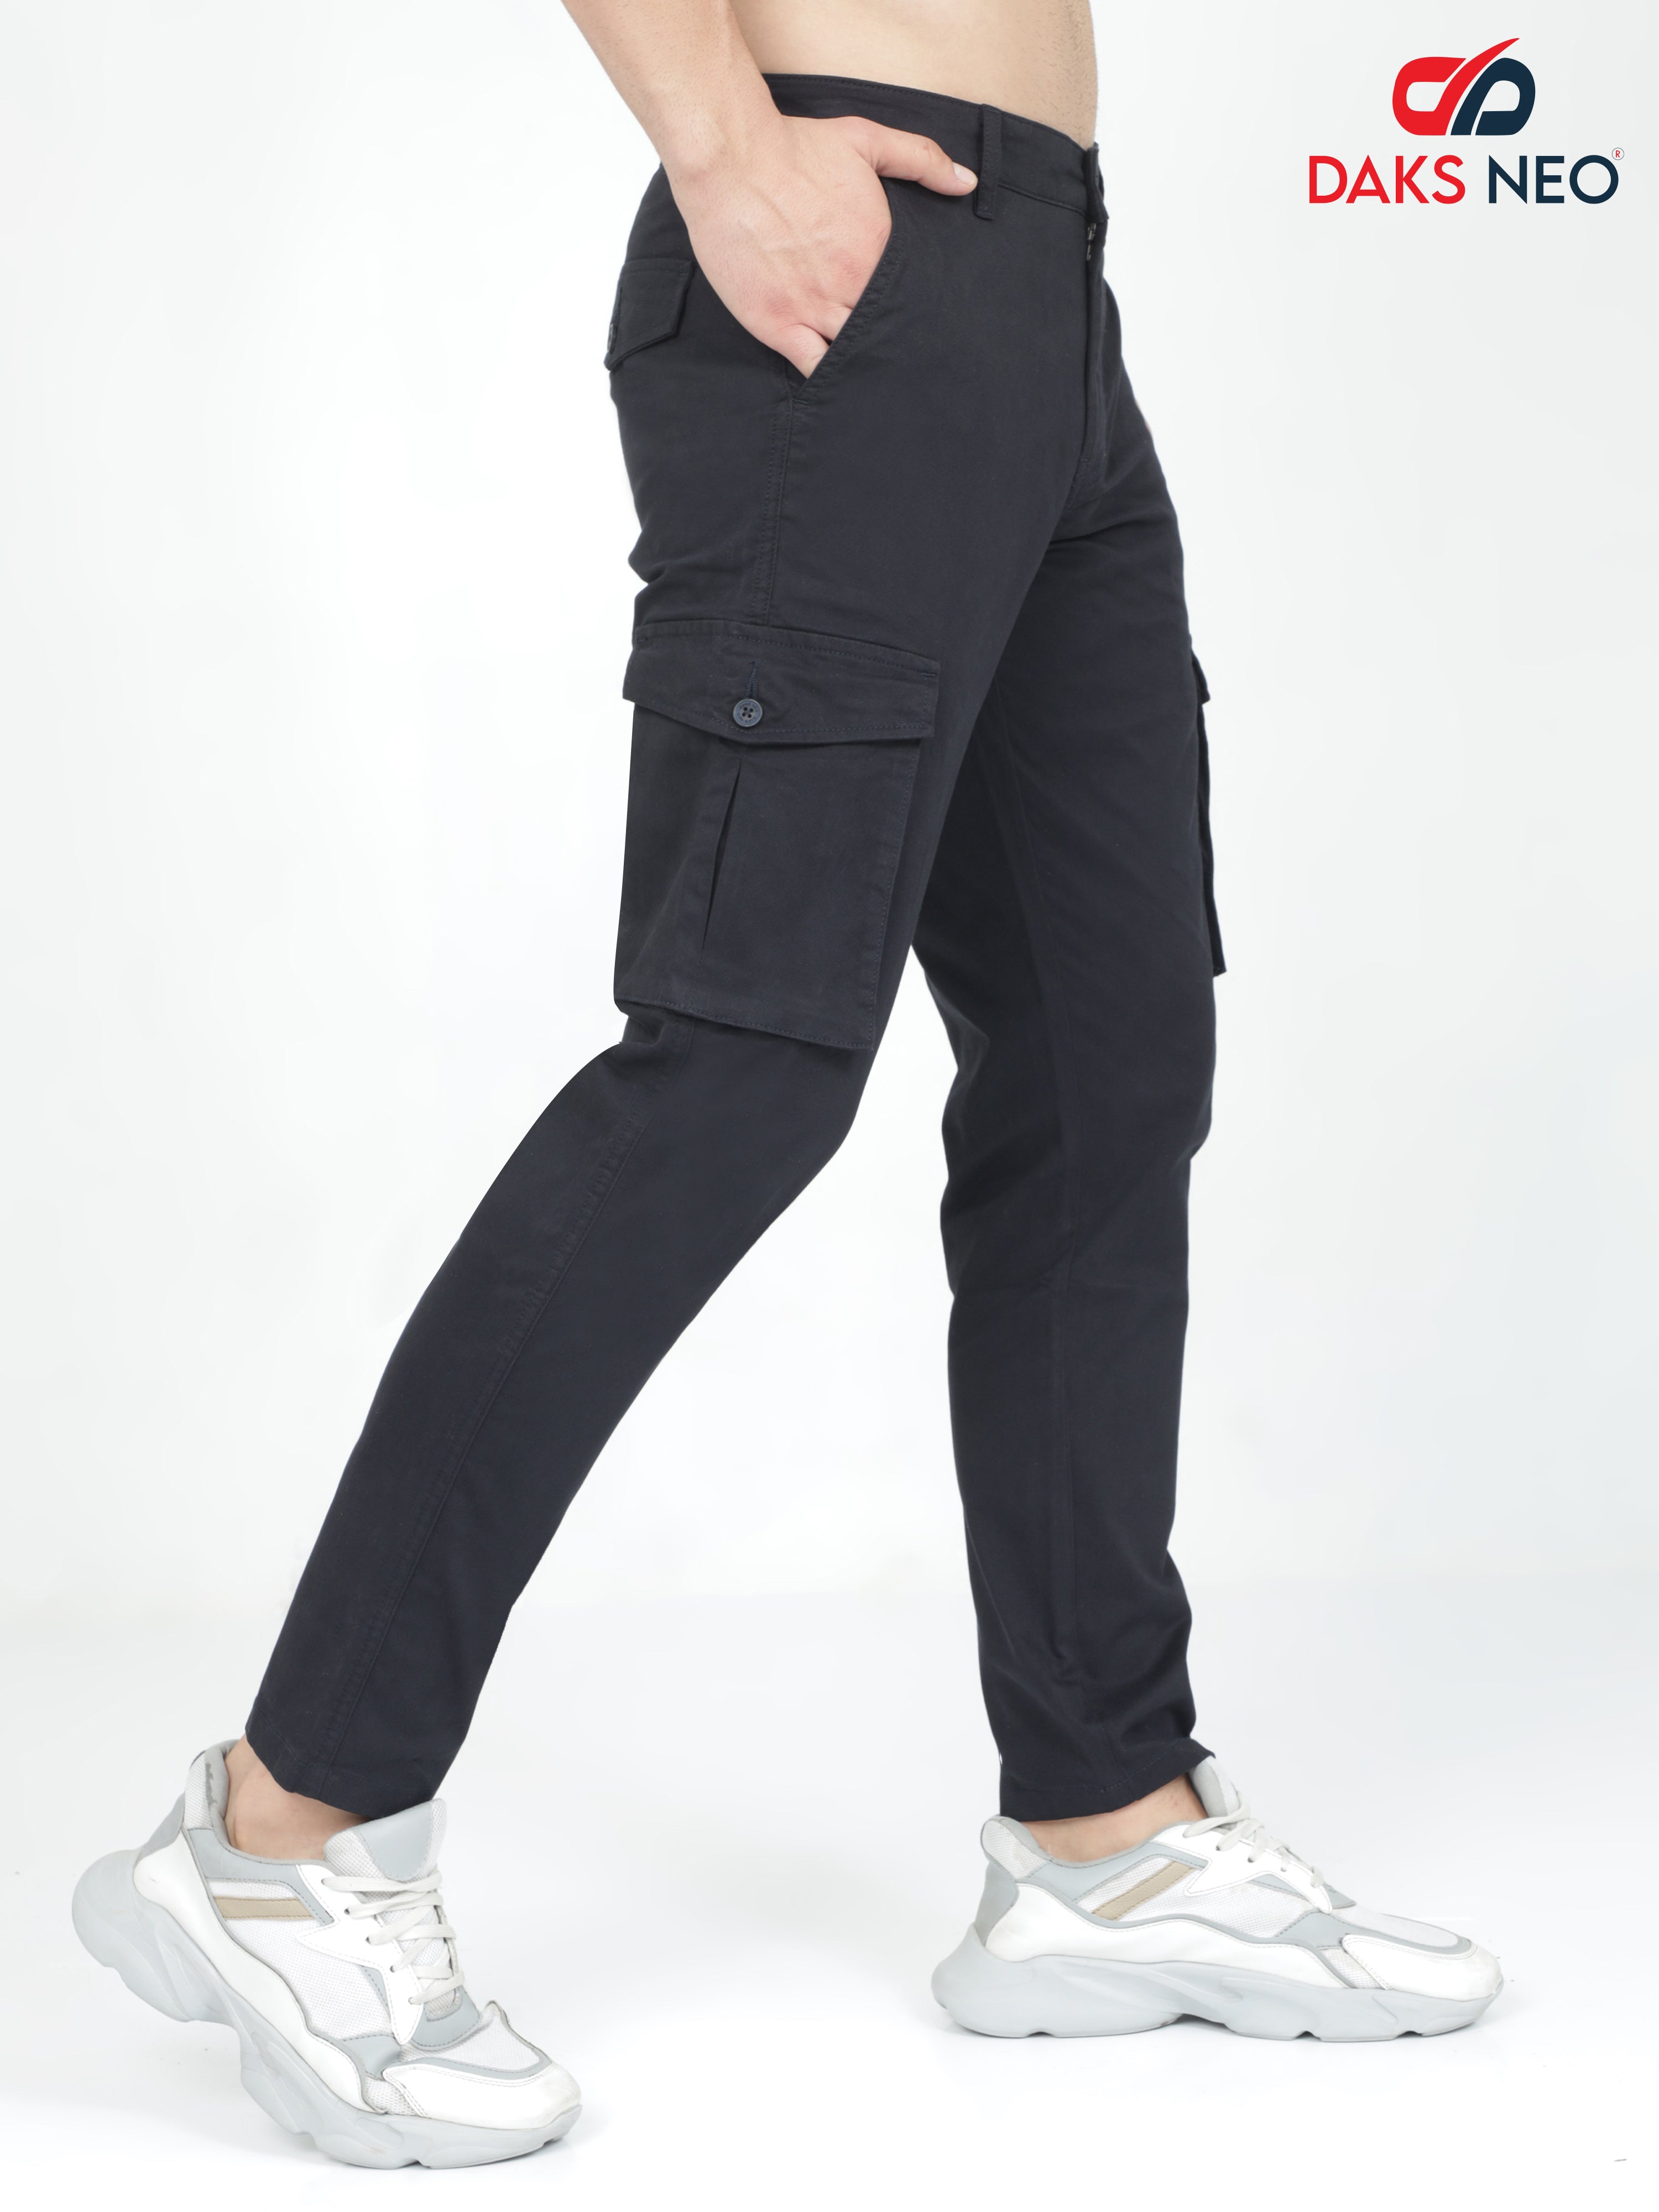 MENS LIGHT GREY CARGO PANTS - Best stretch skinny jeans, chinos | Nicerior